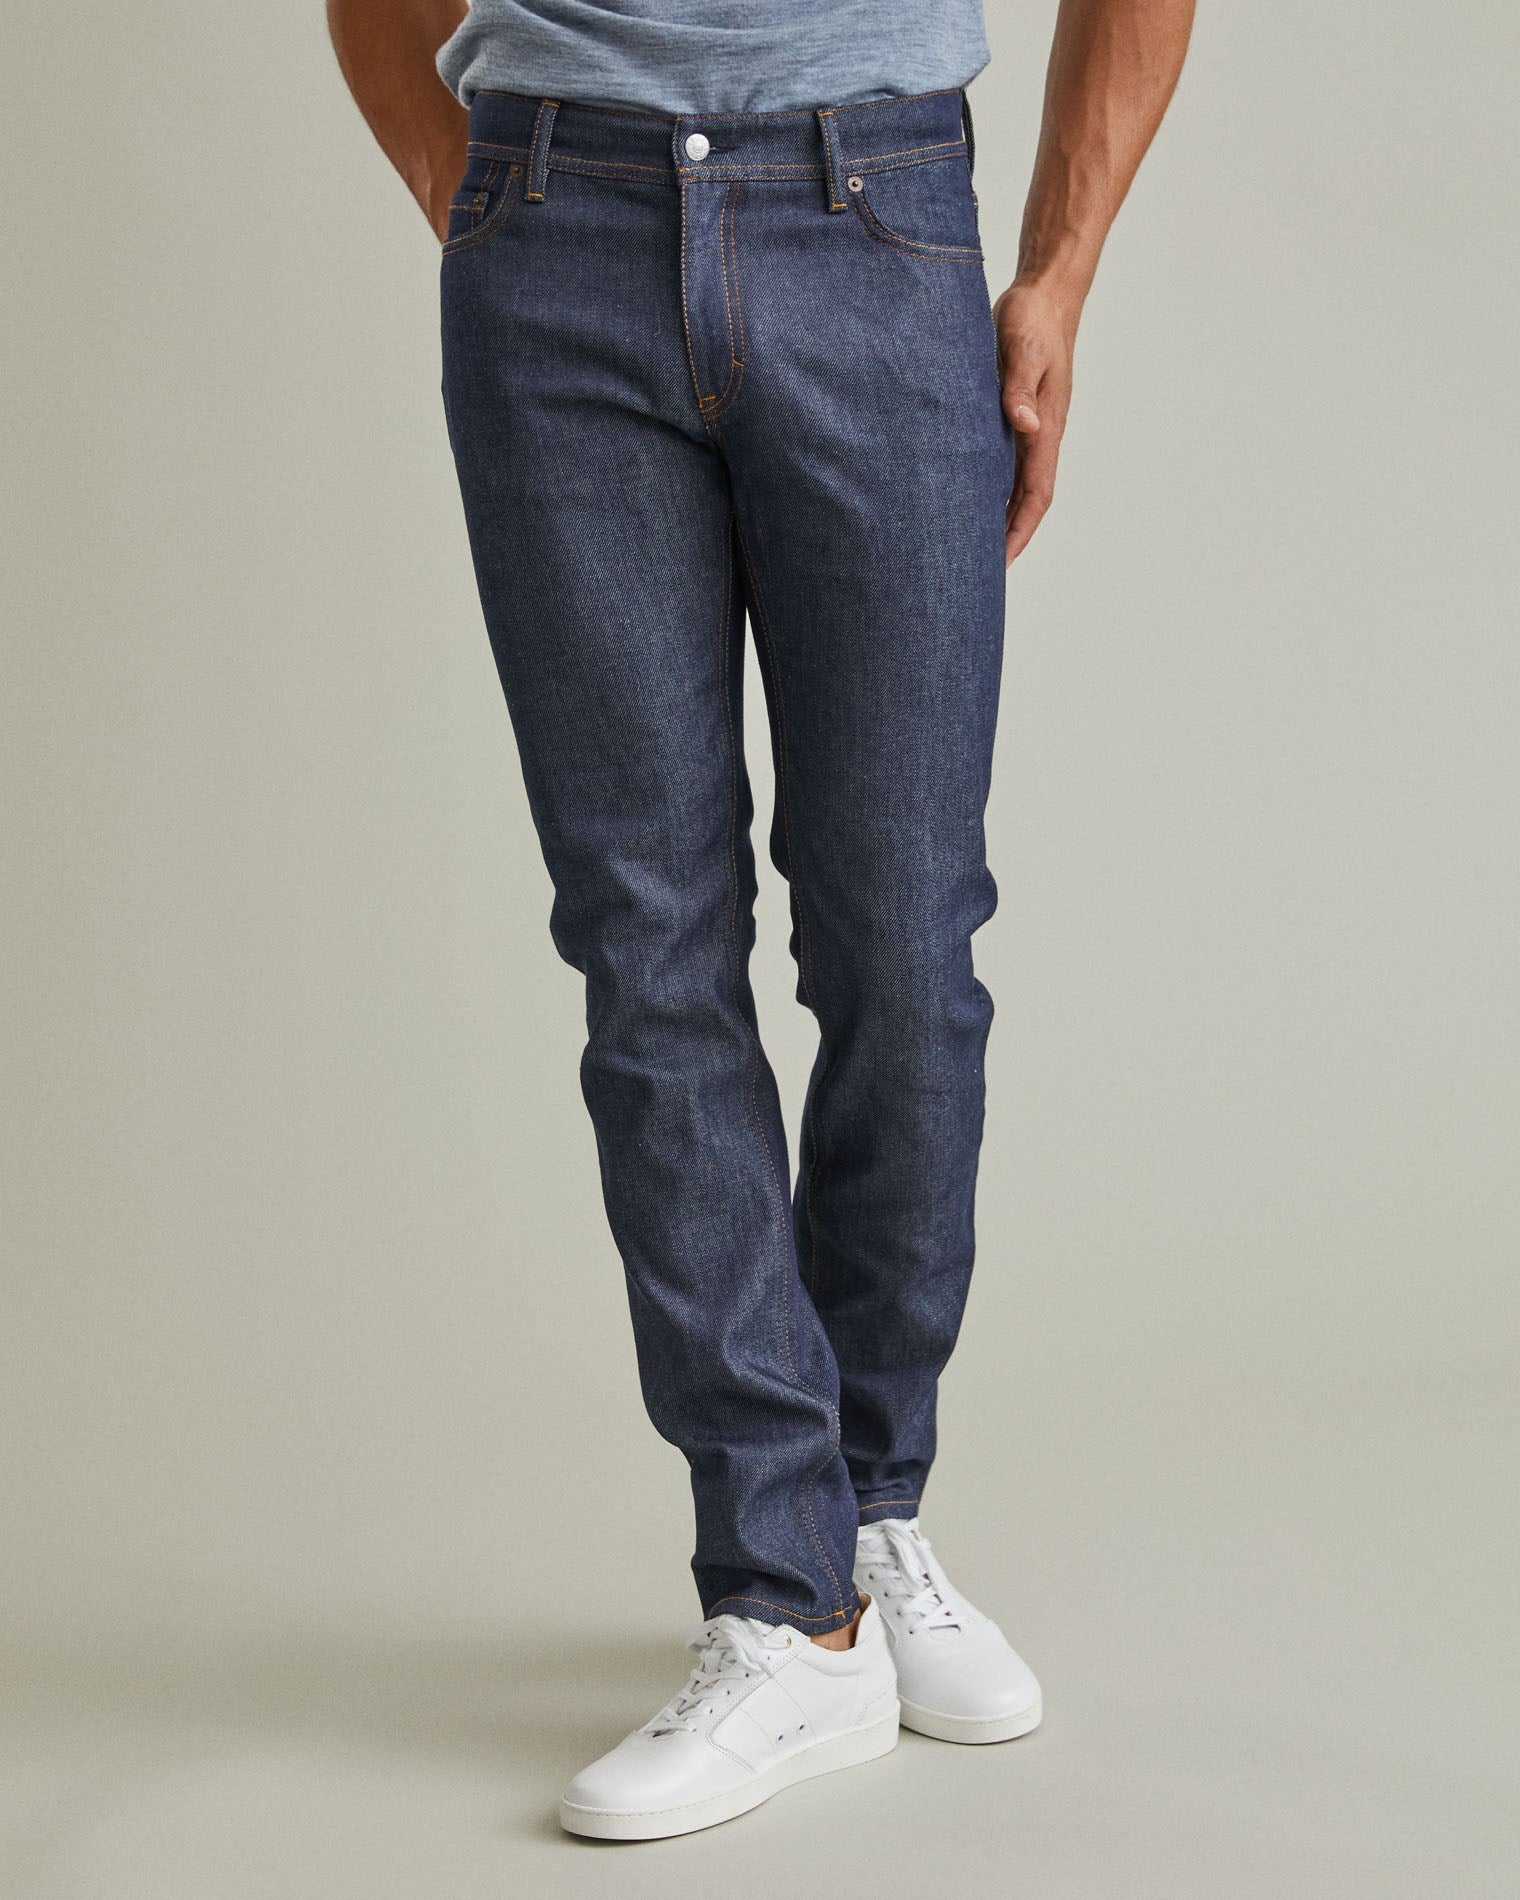 urban jeans price